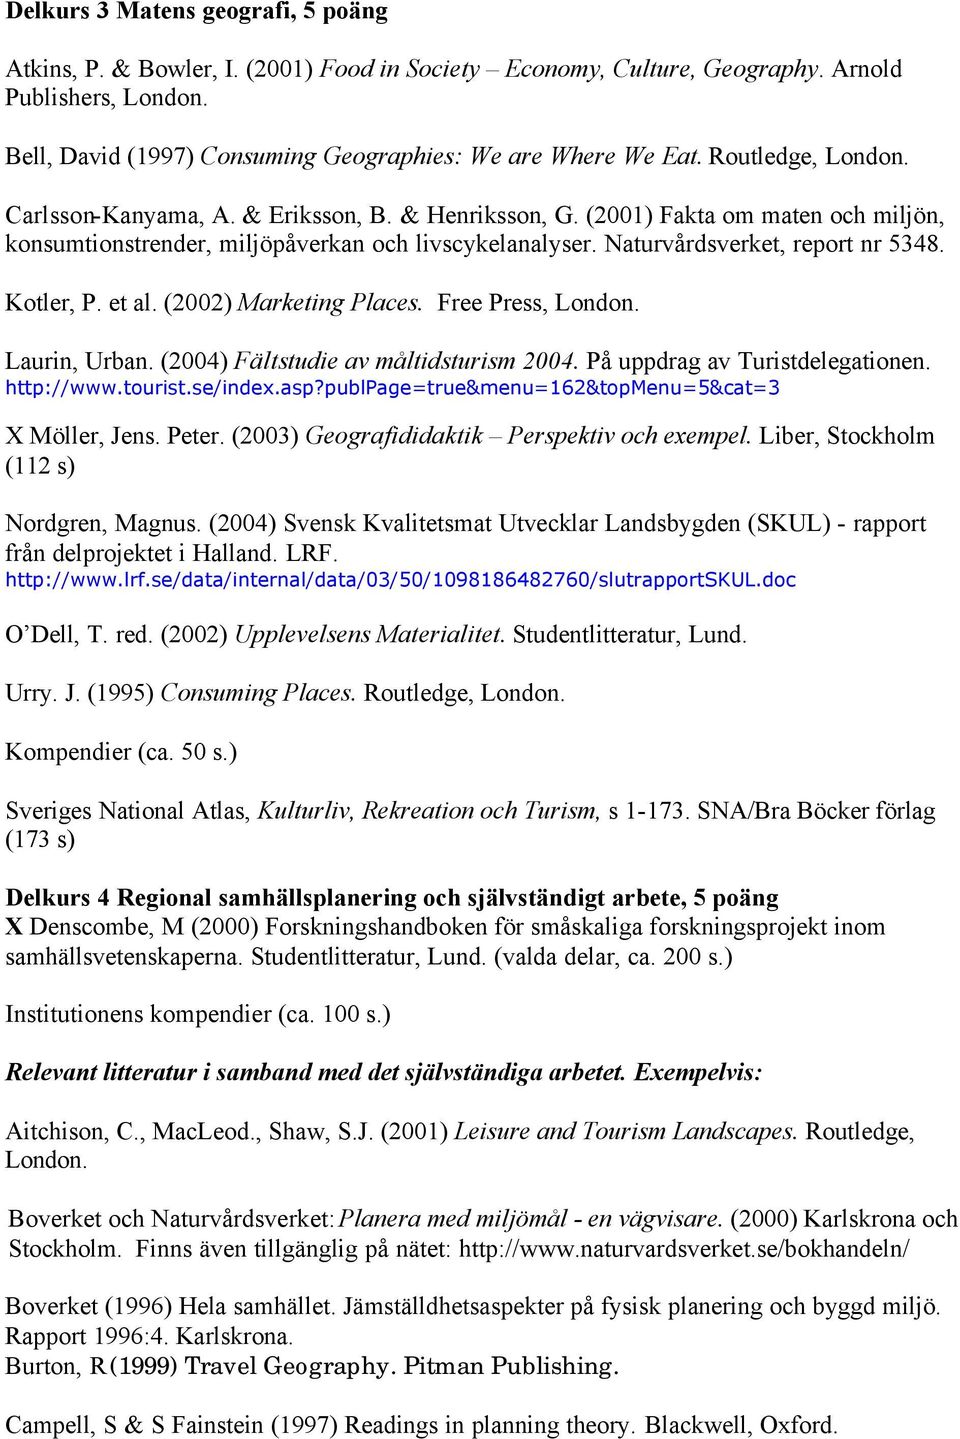 Kotler, P. et al. (2002) Marketing Places. Free Press, London. Laurin, Urban. (2004) Fältstudie av måltidsturism 2004. På uppdrag av Turistdelegationen. http://www.tourist.se/index.asp?